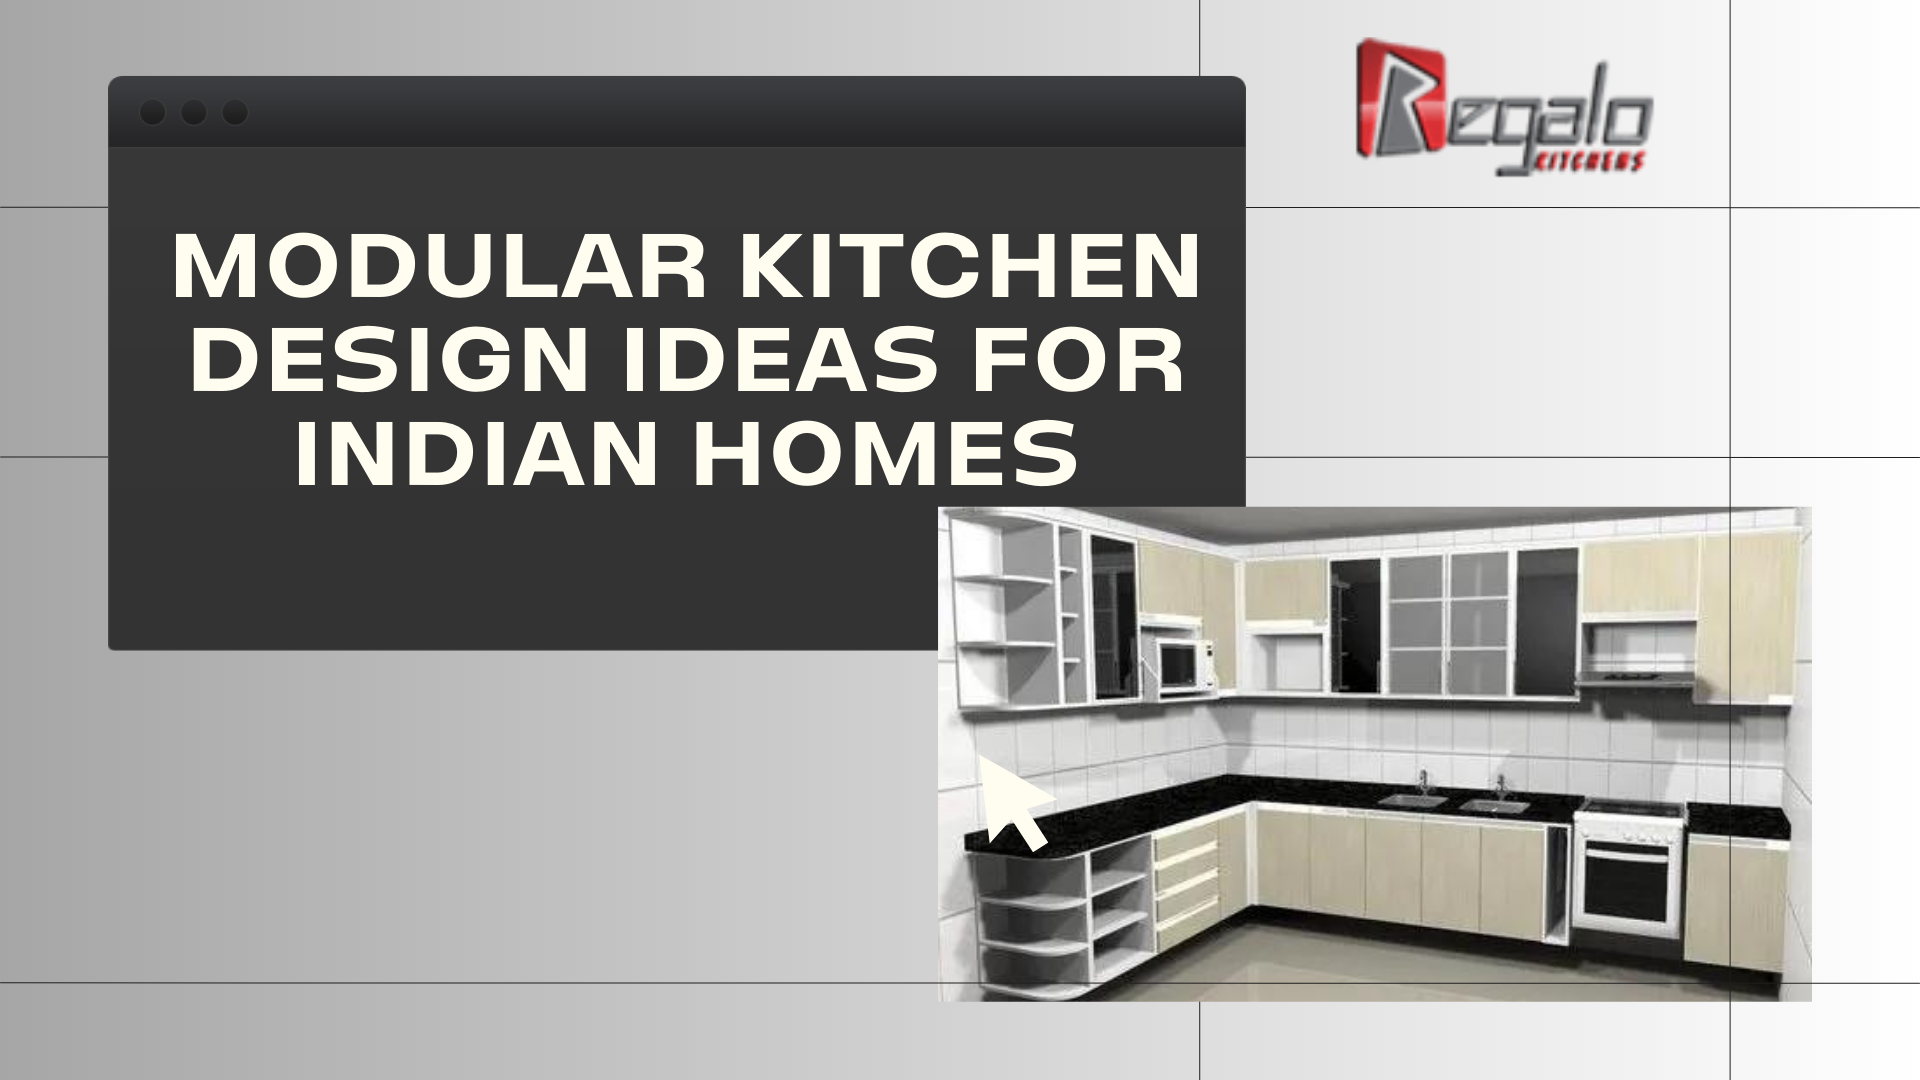 Modular Kitchen Design Ideas for Indian Homes